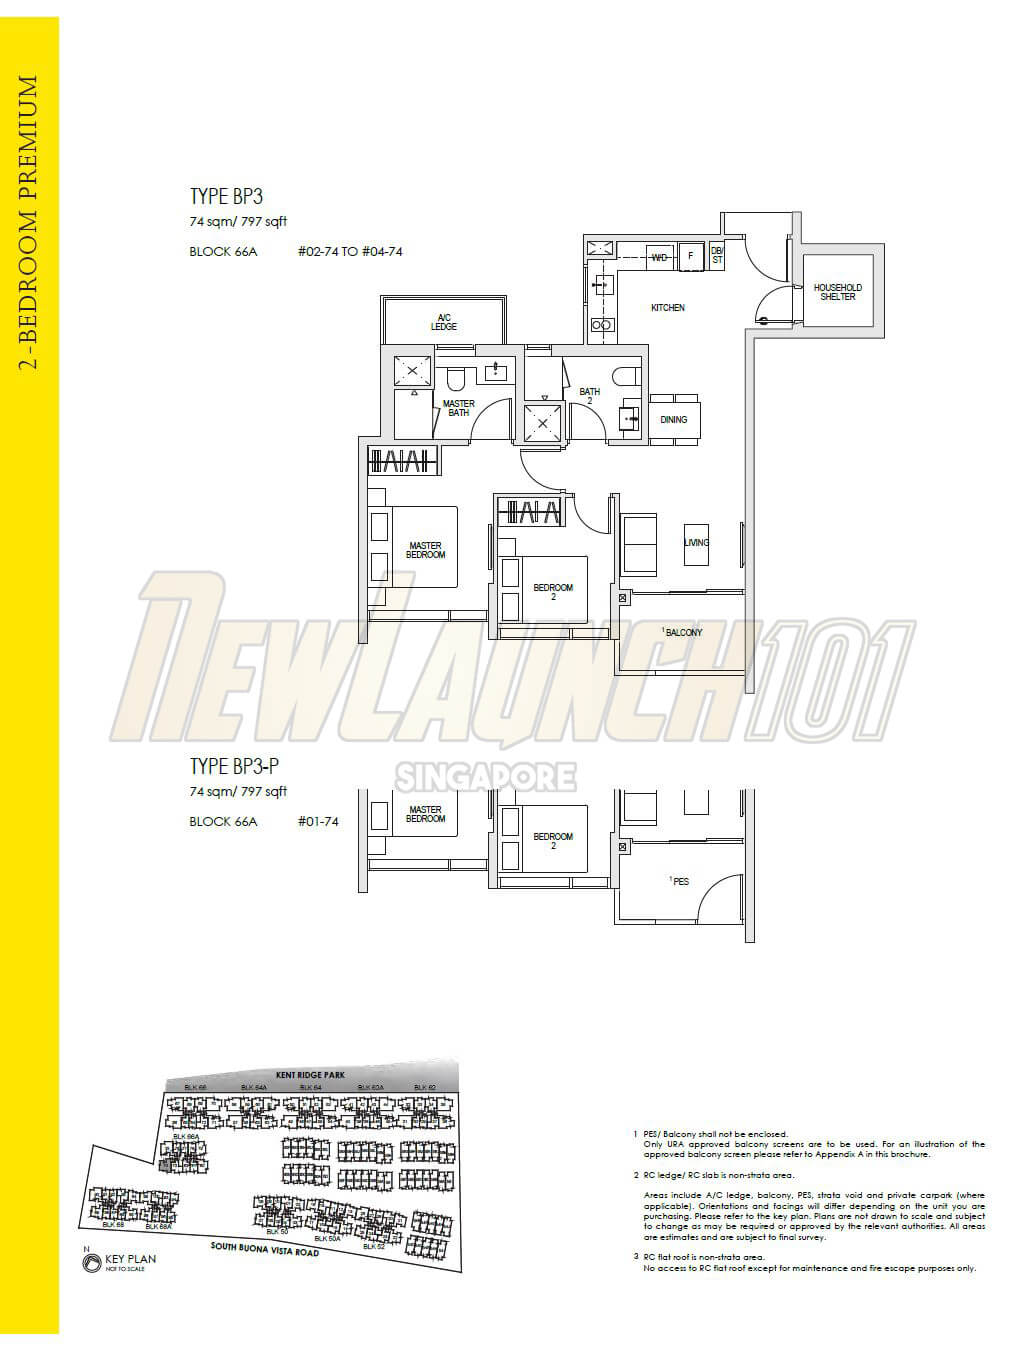 Kent Ridge Hill Residences Floor Plan 2-Bedroom Type BP3